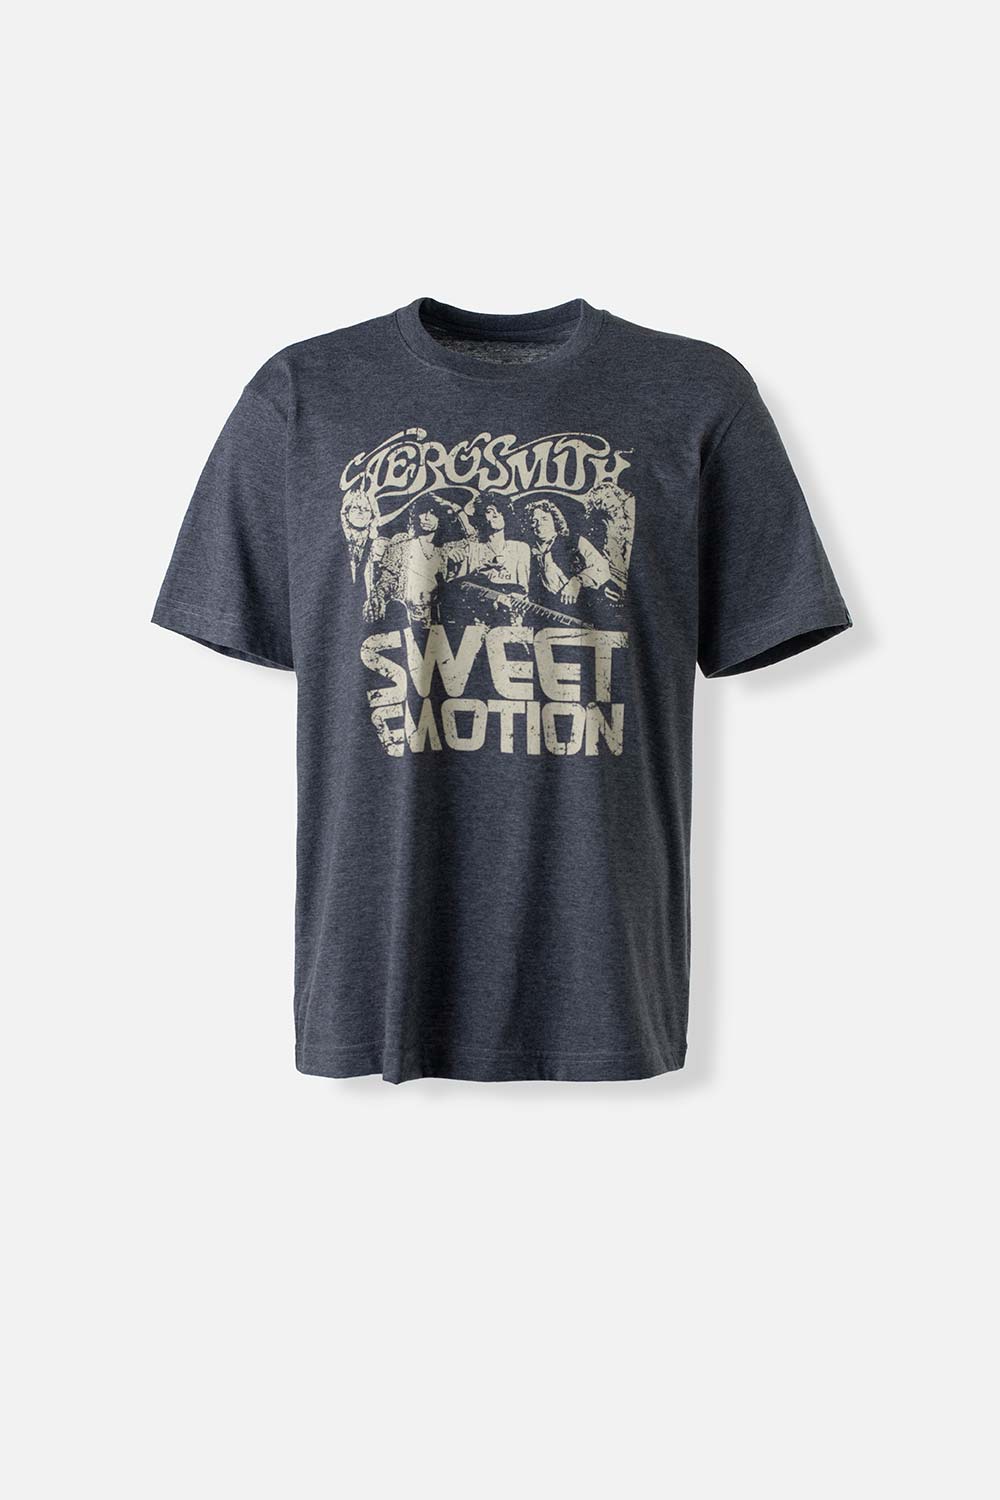 Camiseta de Aerosmith, manga corta gris para Hombre XS-0